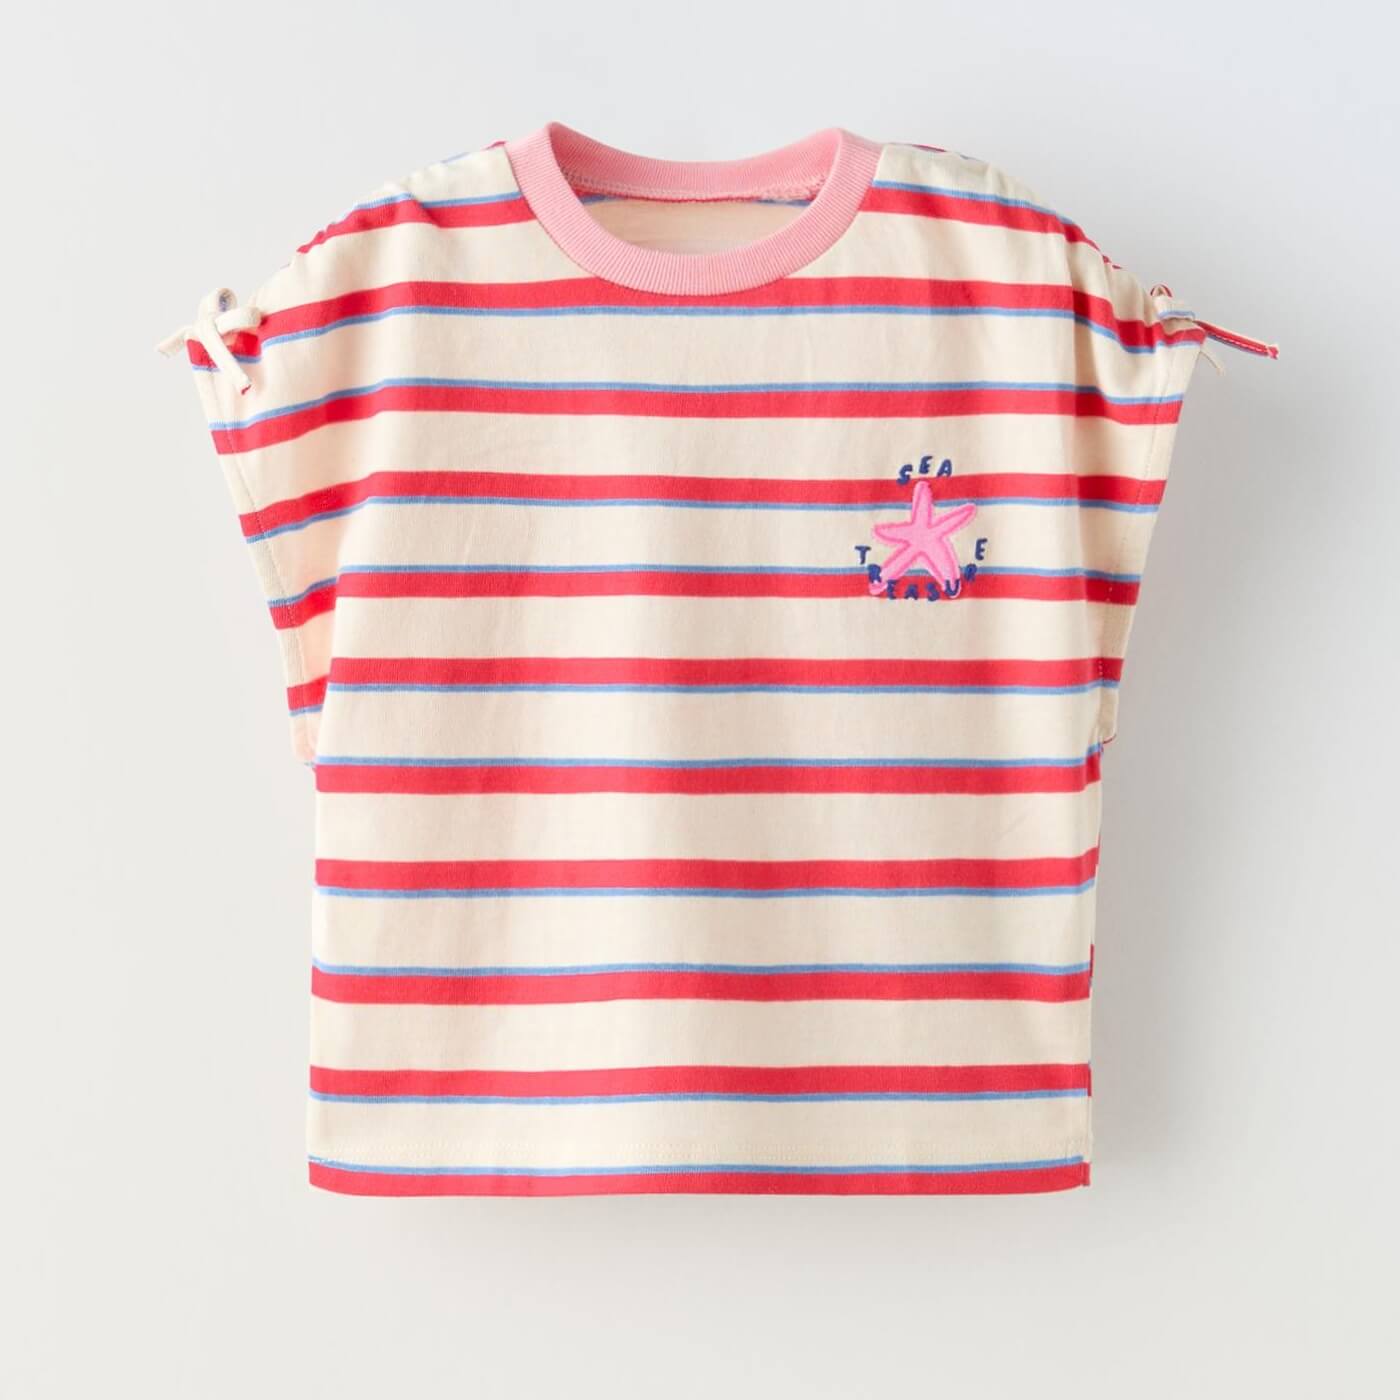 Футболка Zara Summer Camp Striped Embroidered Bows, красный/бежевый